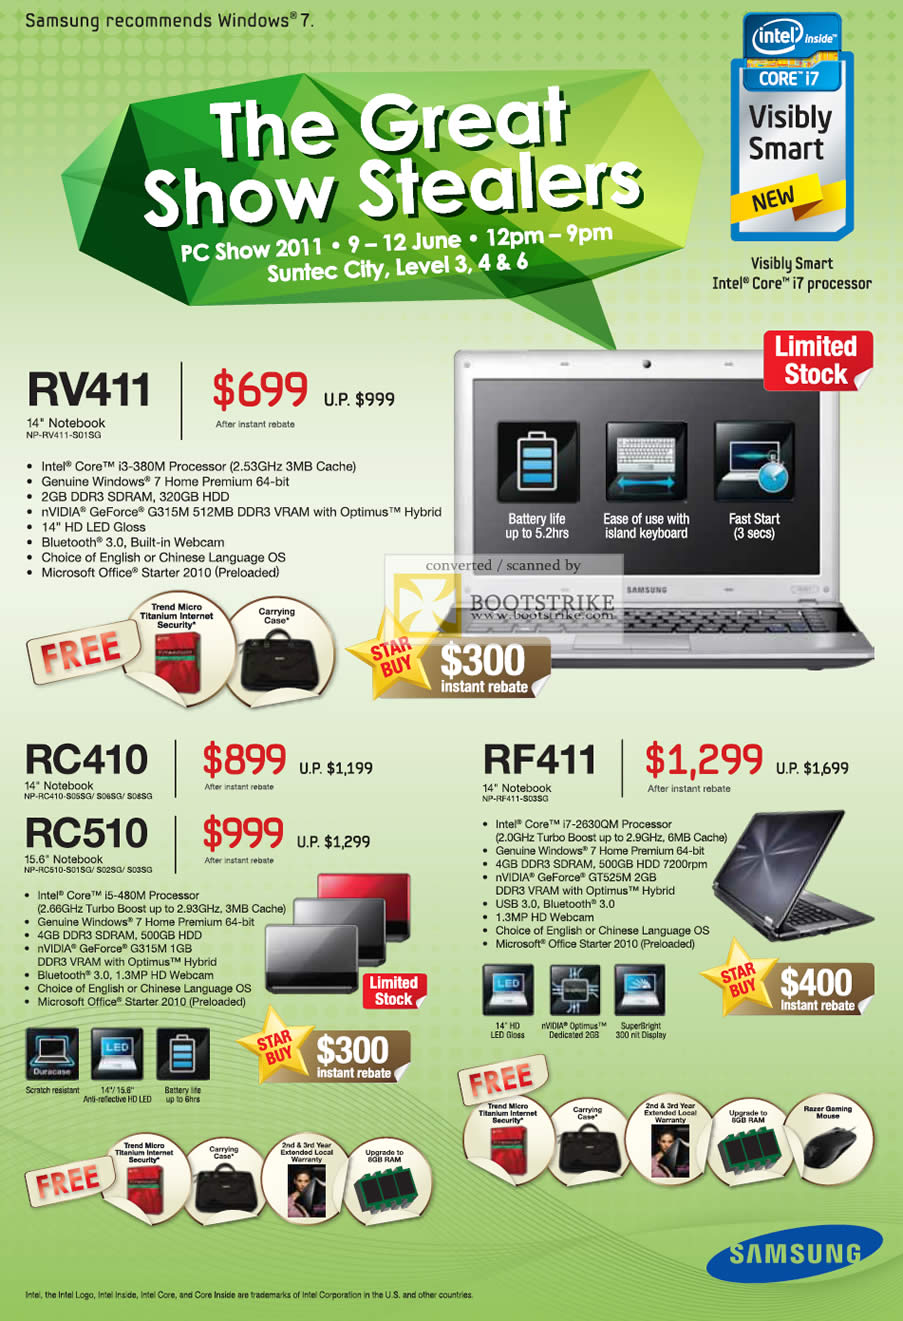 PC Show 2011 price list image brochure of Samsung Notebooks RV411 RC410 RC510 RF411 LED Gloss